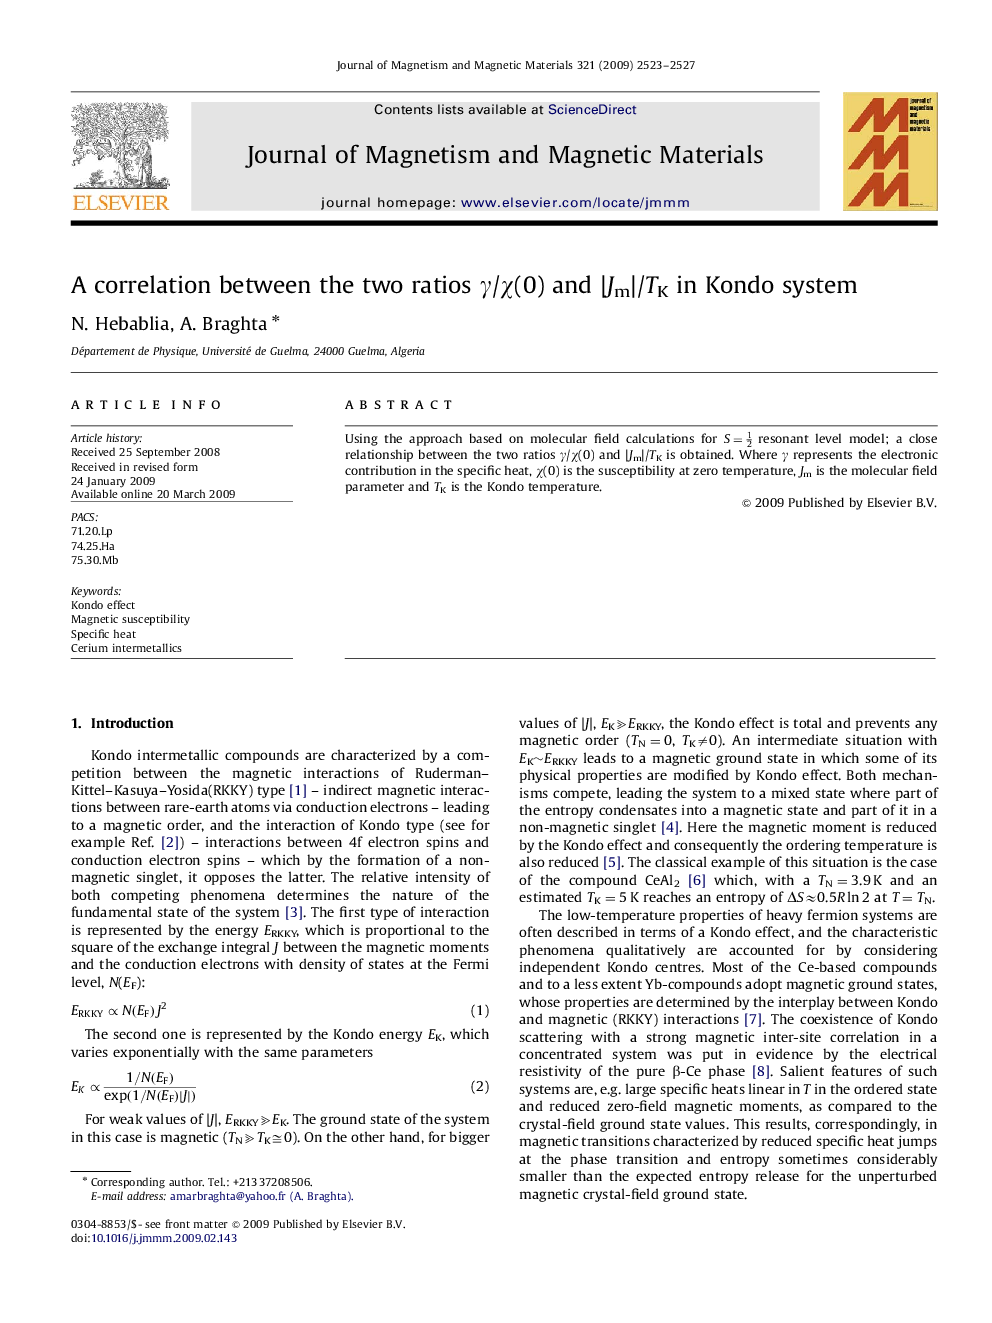 A correlation between the two ratios Î³/Ï(0) and |Jm|/TK in Kondo system